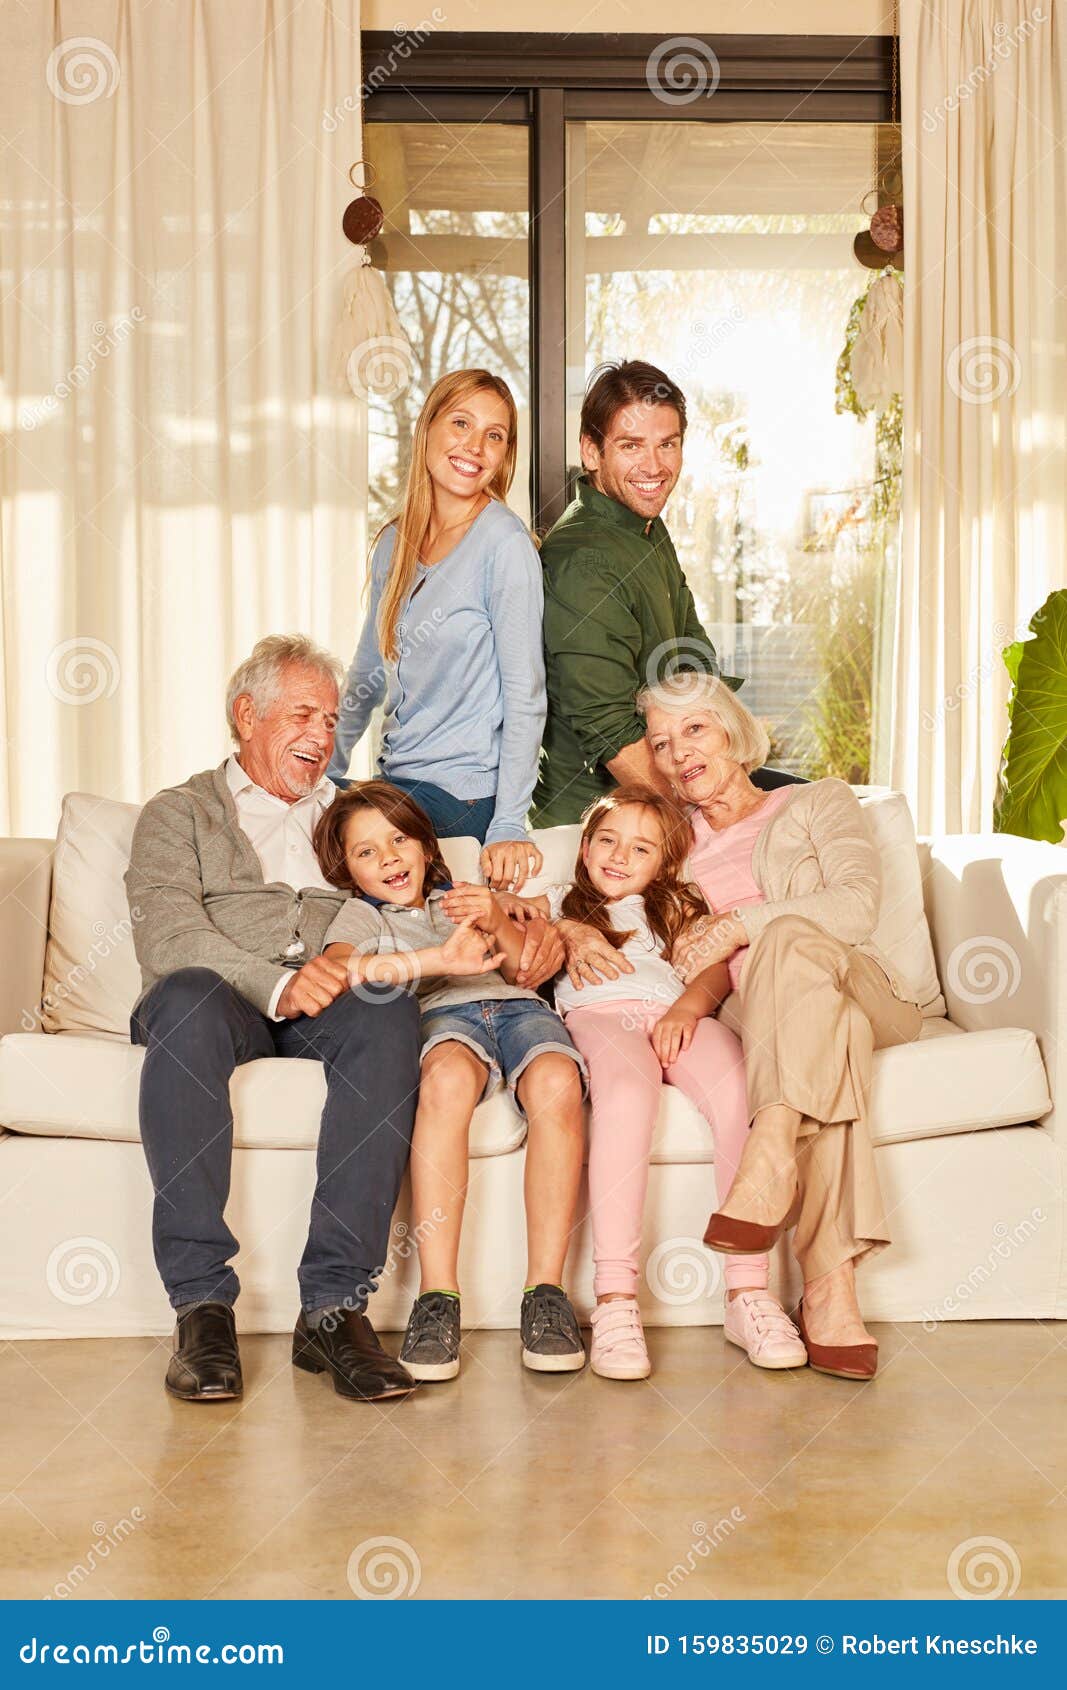 Фото Семьи С Детьми Бабушками И Дедушками